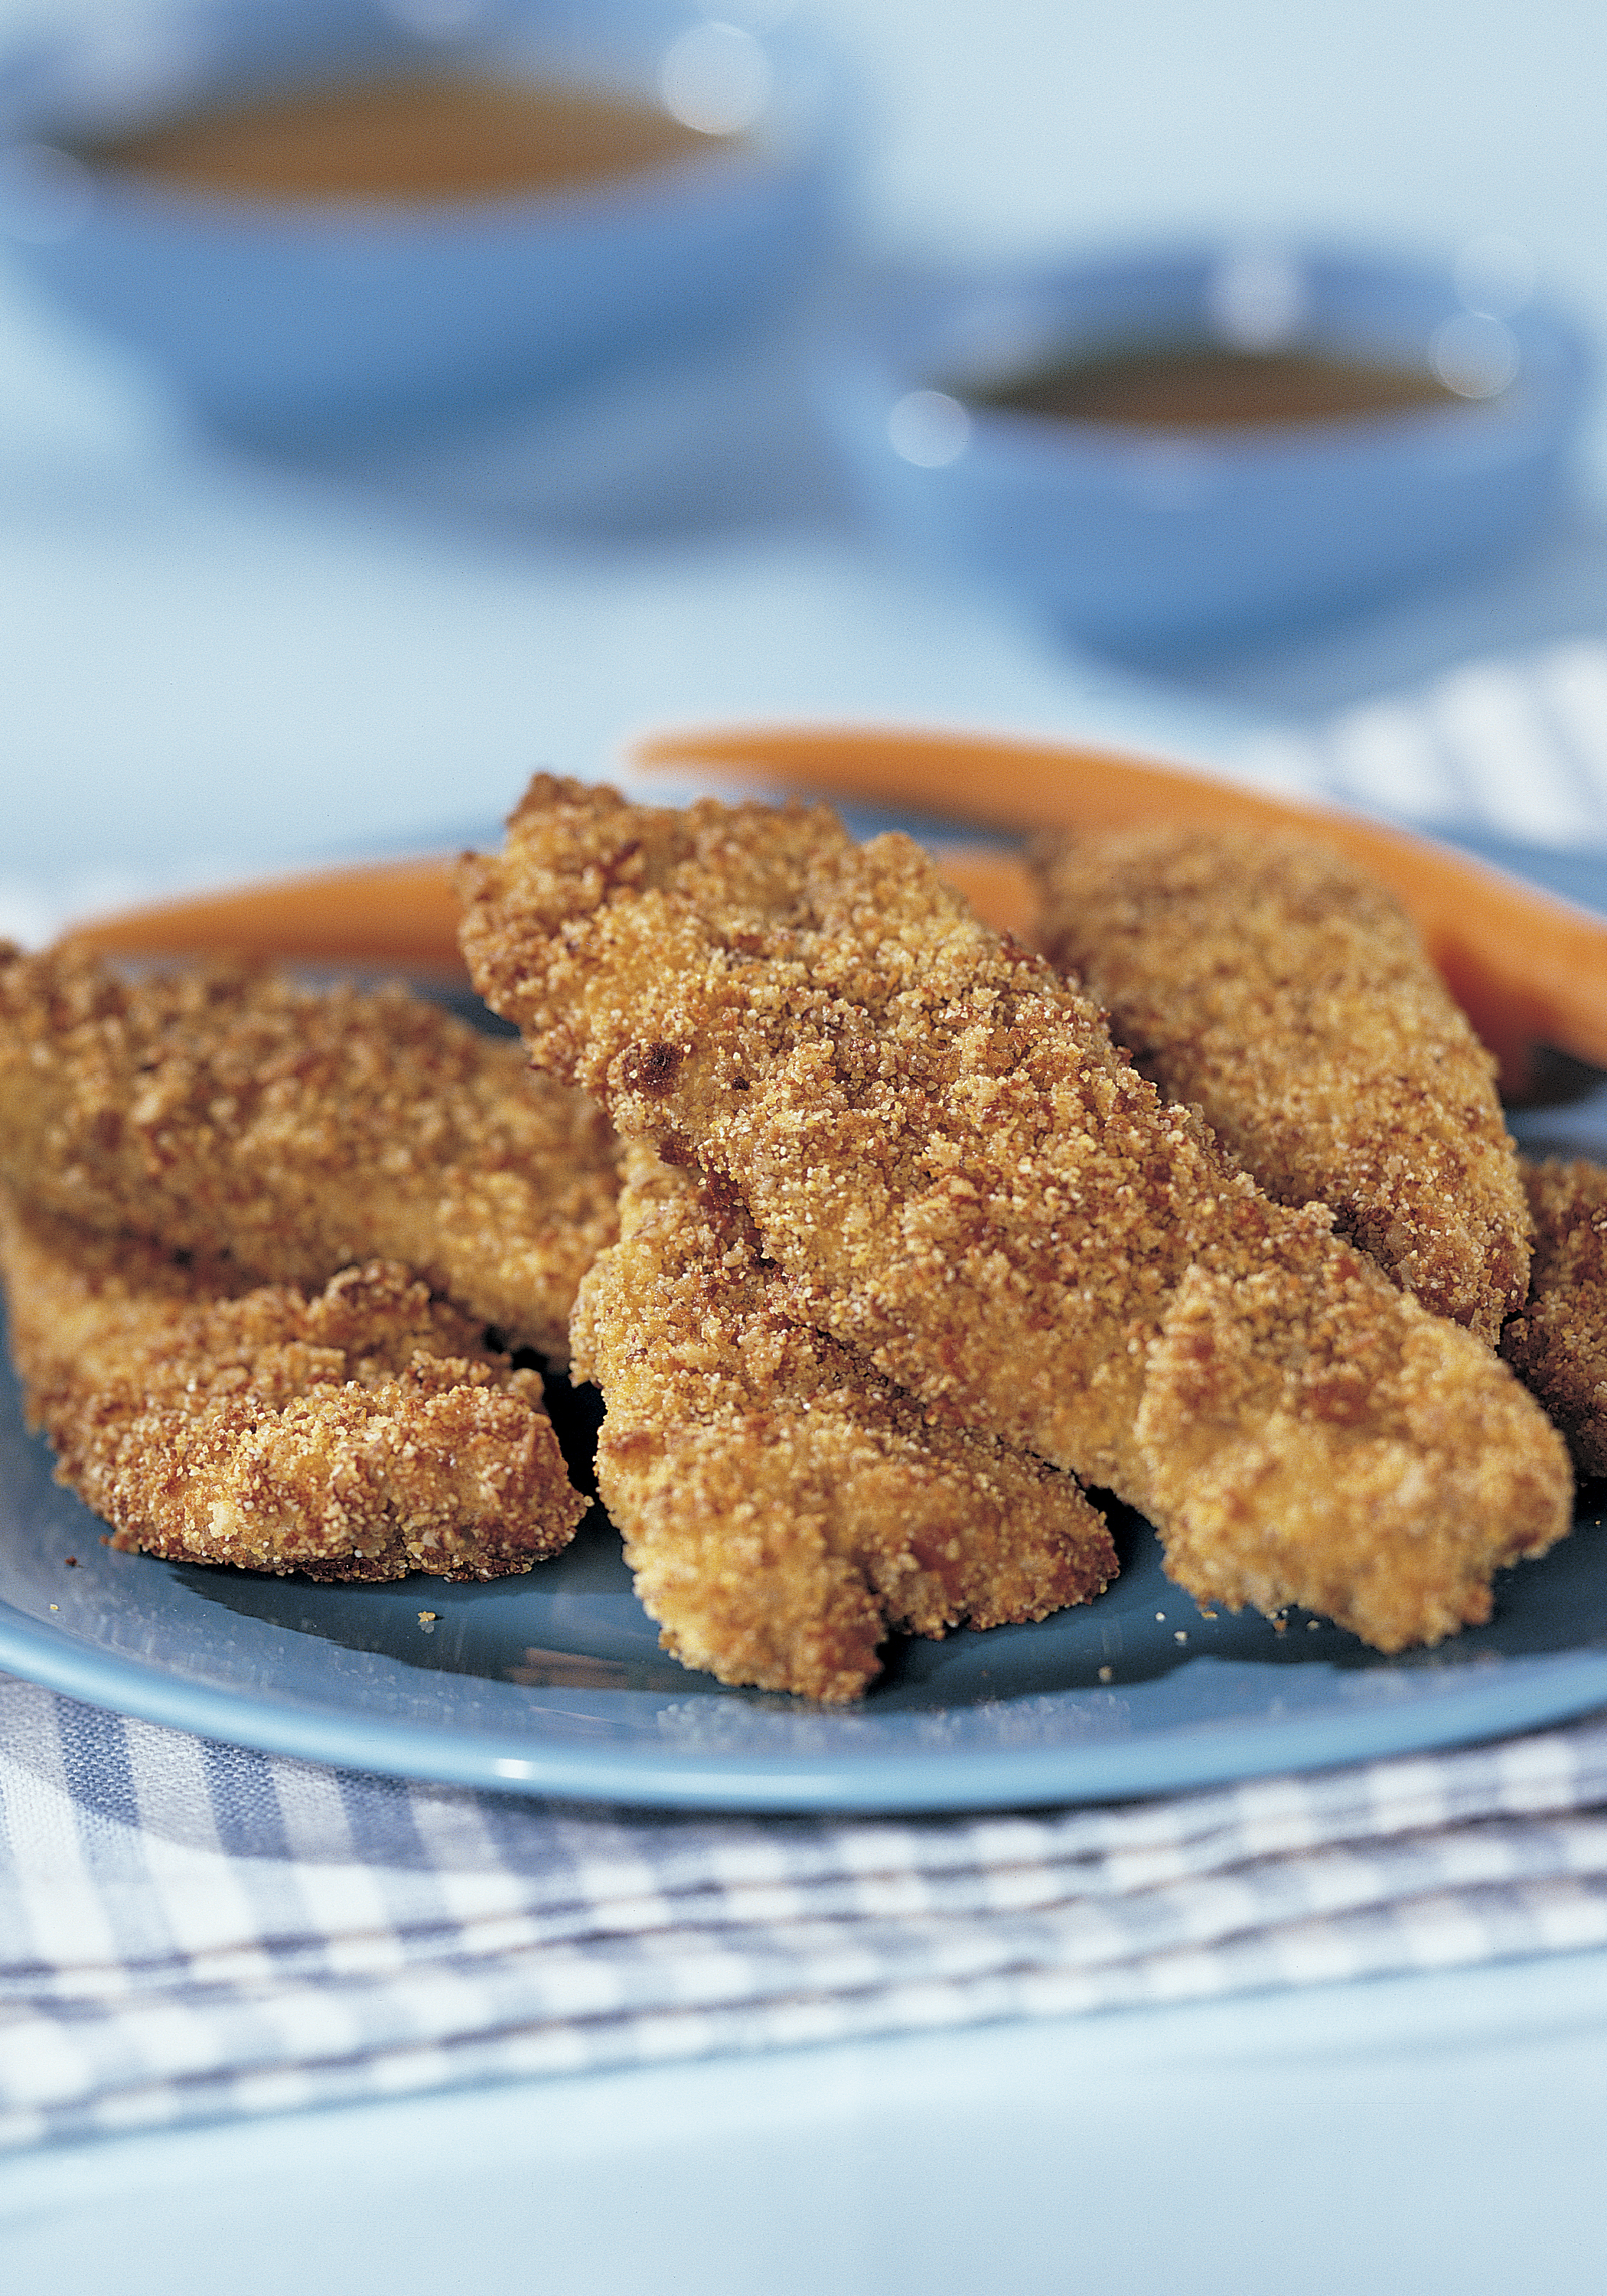 Crispy Baked Chicken Strips - regular and gluten free options | hiddenponies.com